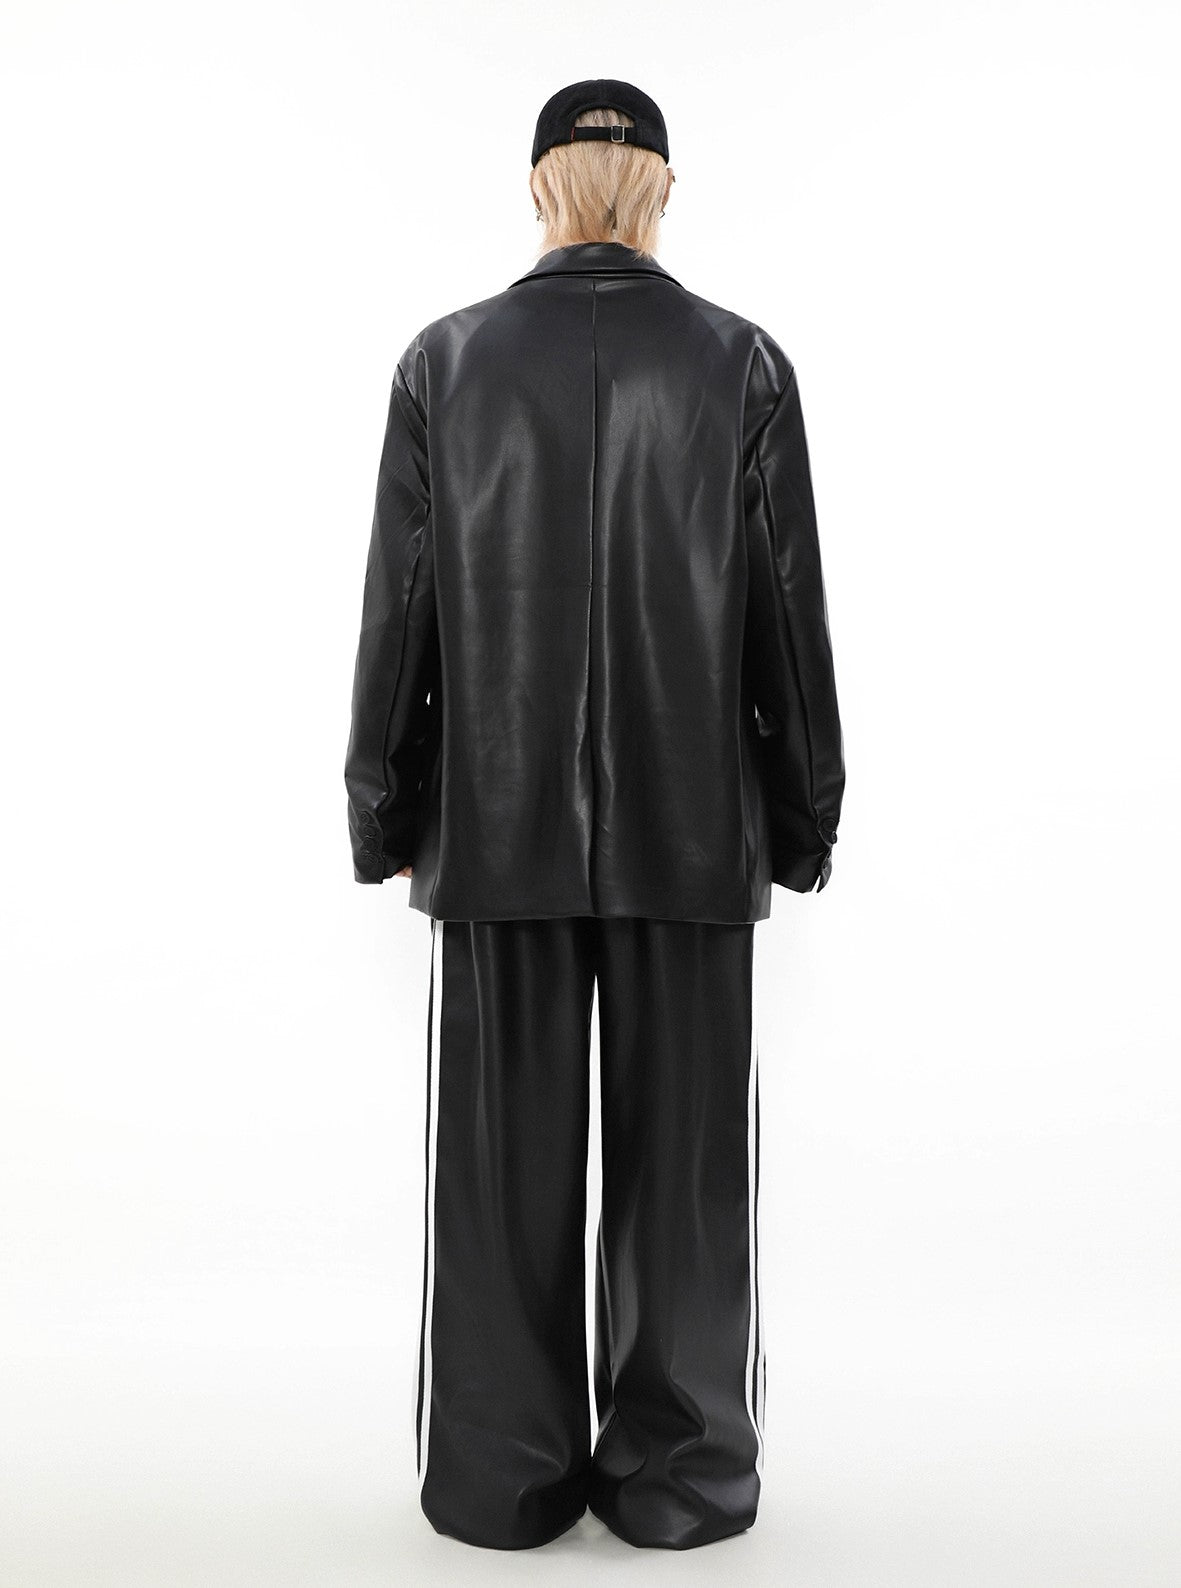 Oversize PU Leather Tailored Jacket & Wide-leg PU Leather Trousers Setup WN3065